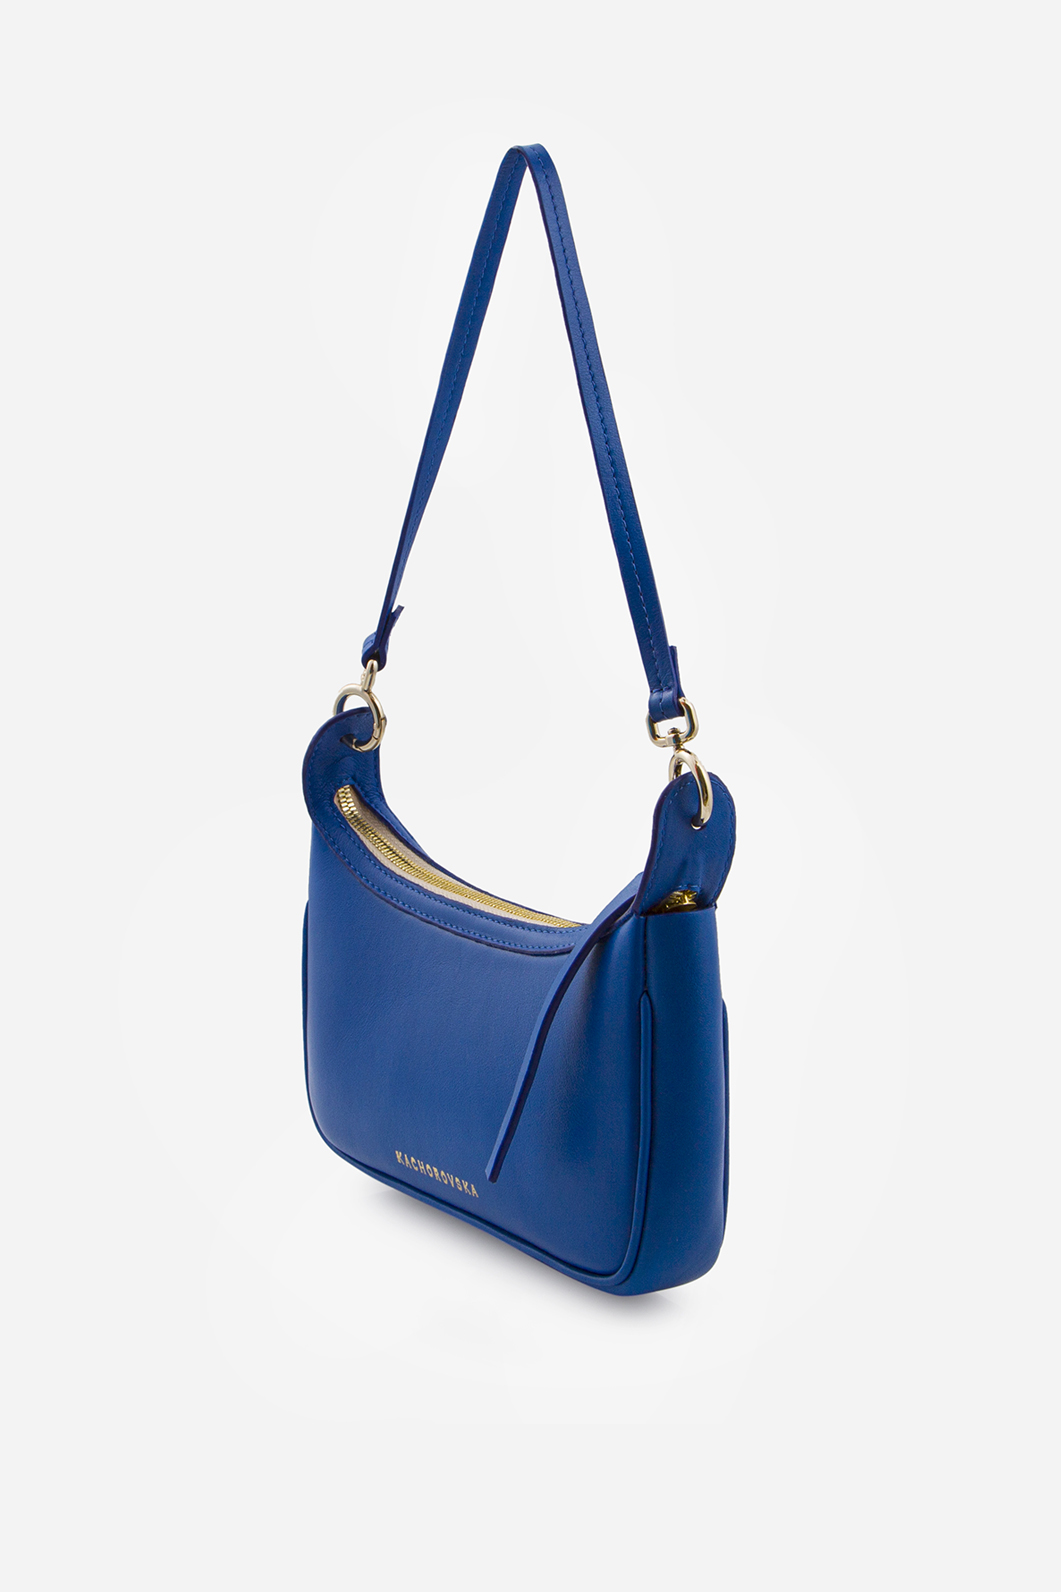 Gia dark blue leather
baguette bag /gold/